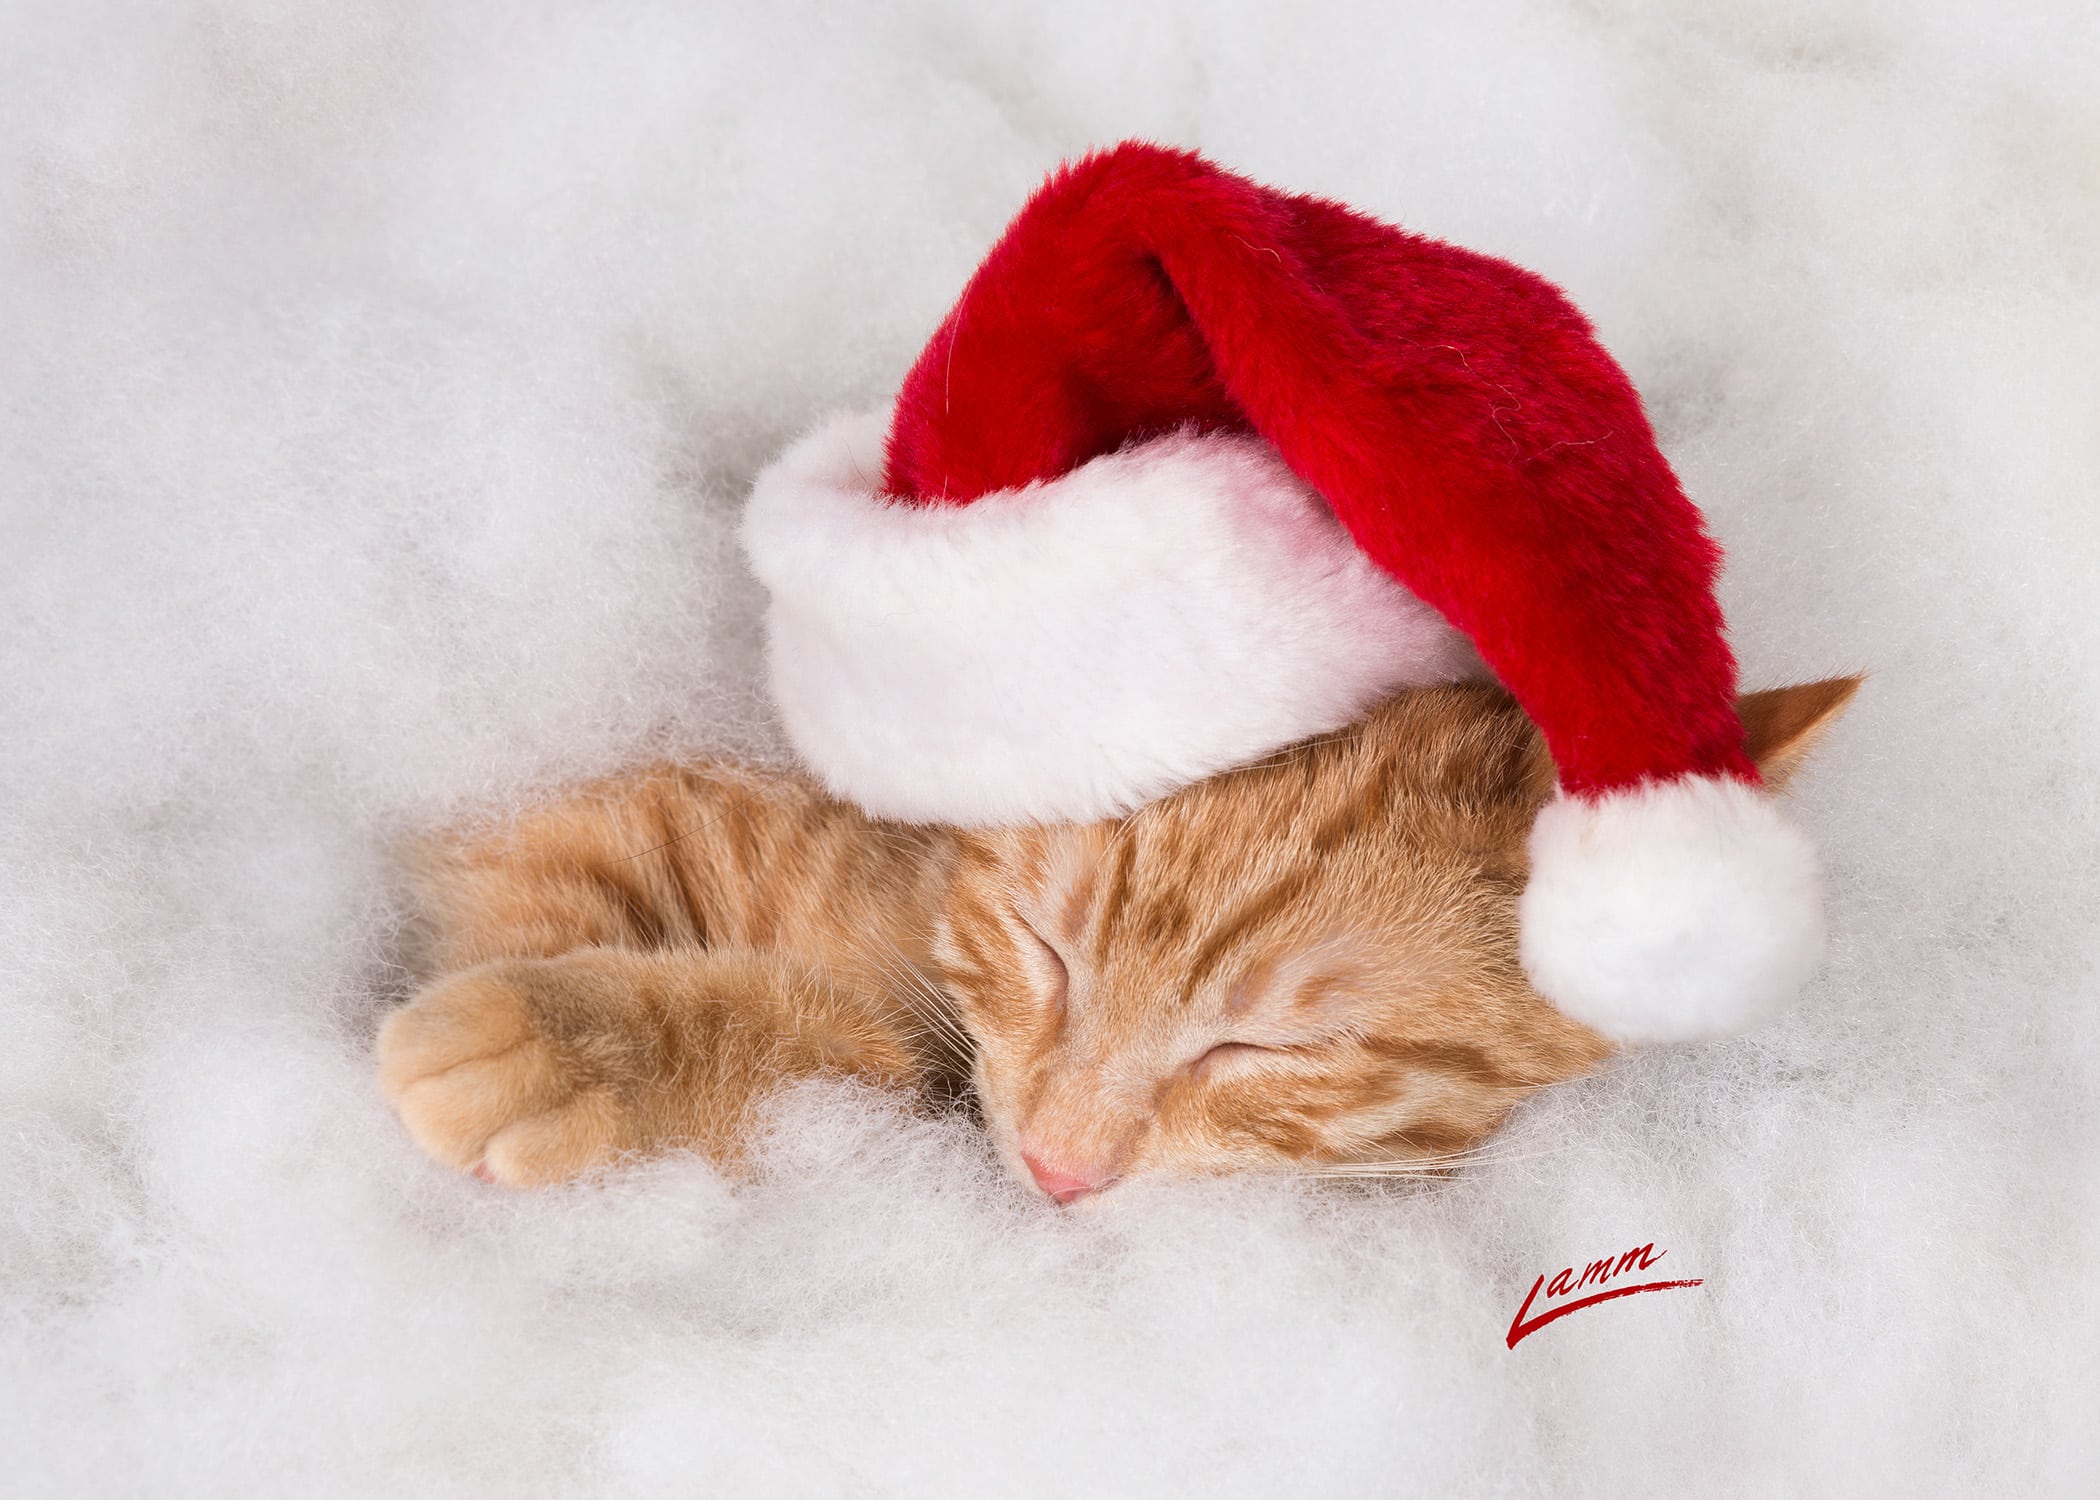 An orange kitten wearing a Santa hat is asleep in a pile of white cotton "snow".